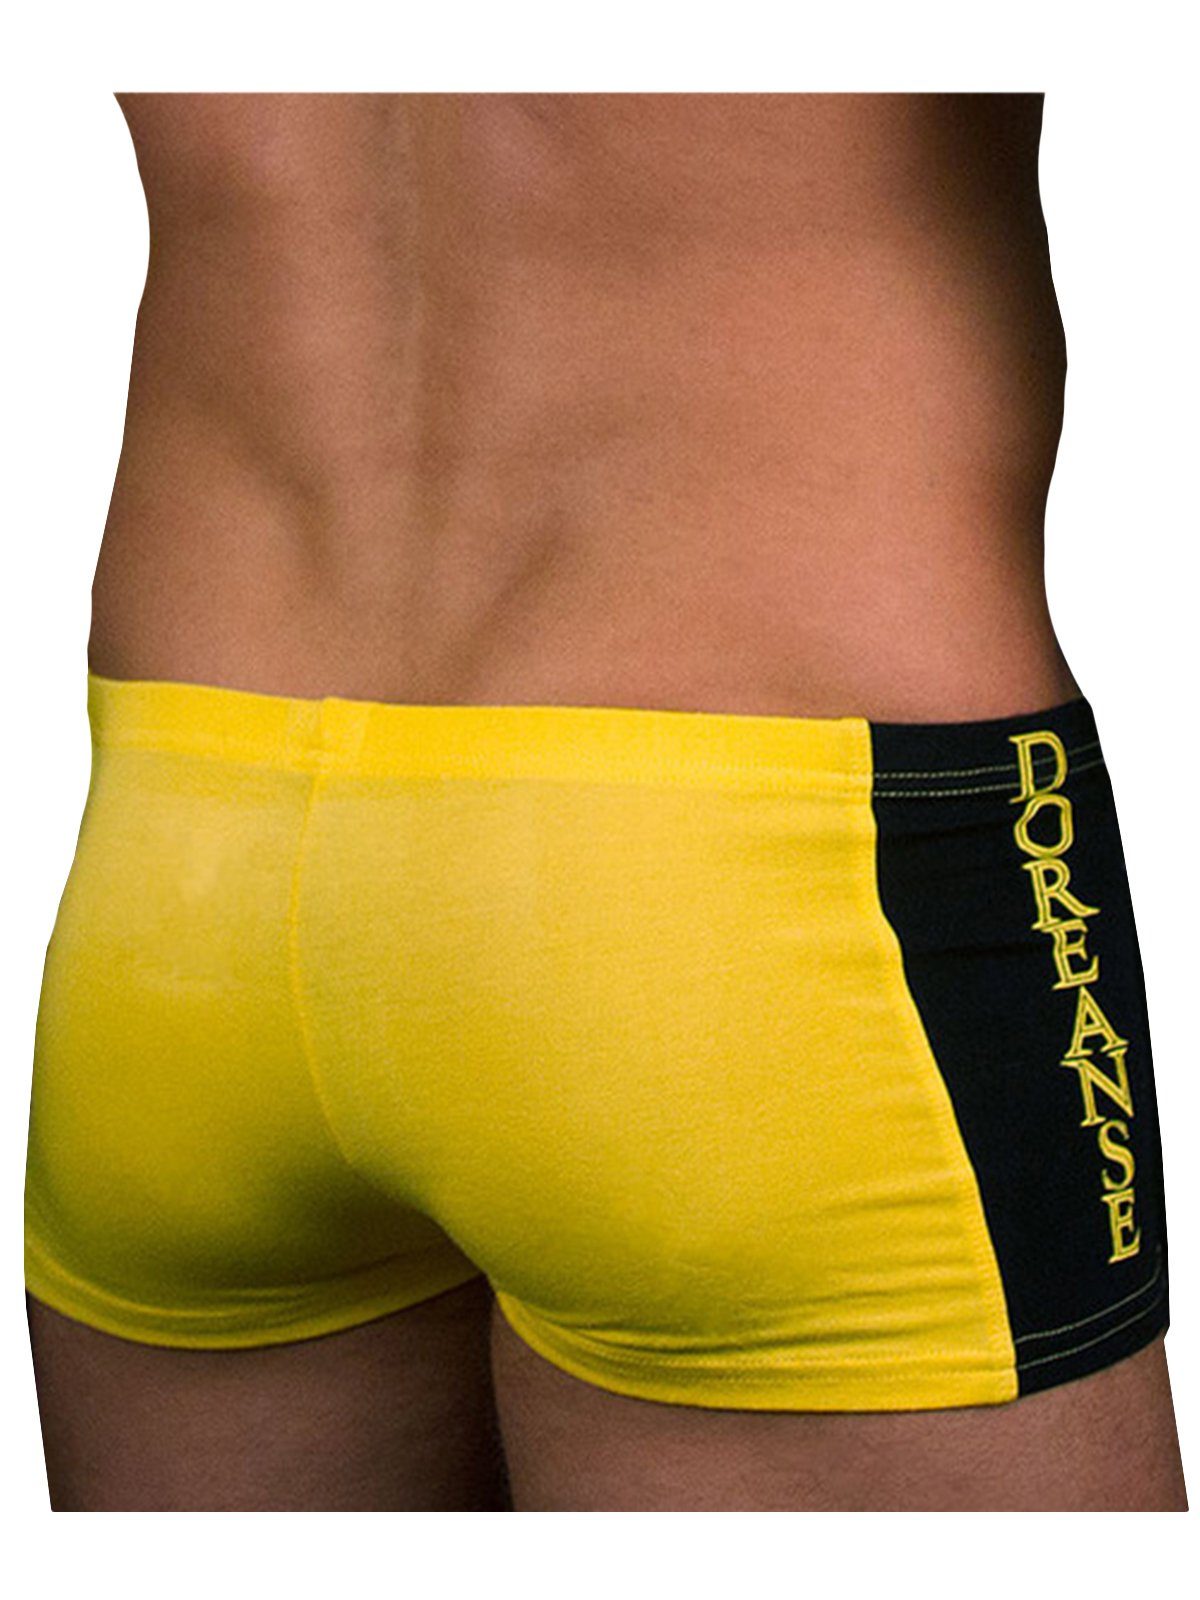 Doreanse Boxer Hipster Männer original Herren Underwear Doreanse Pants, DA1599 Trunk Gelb